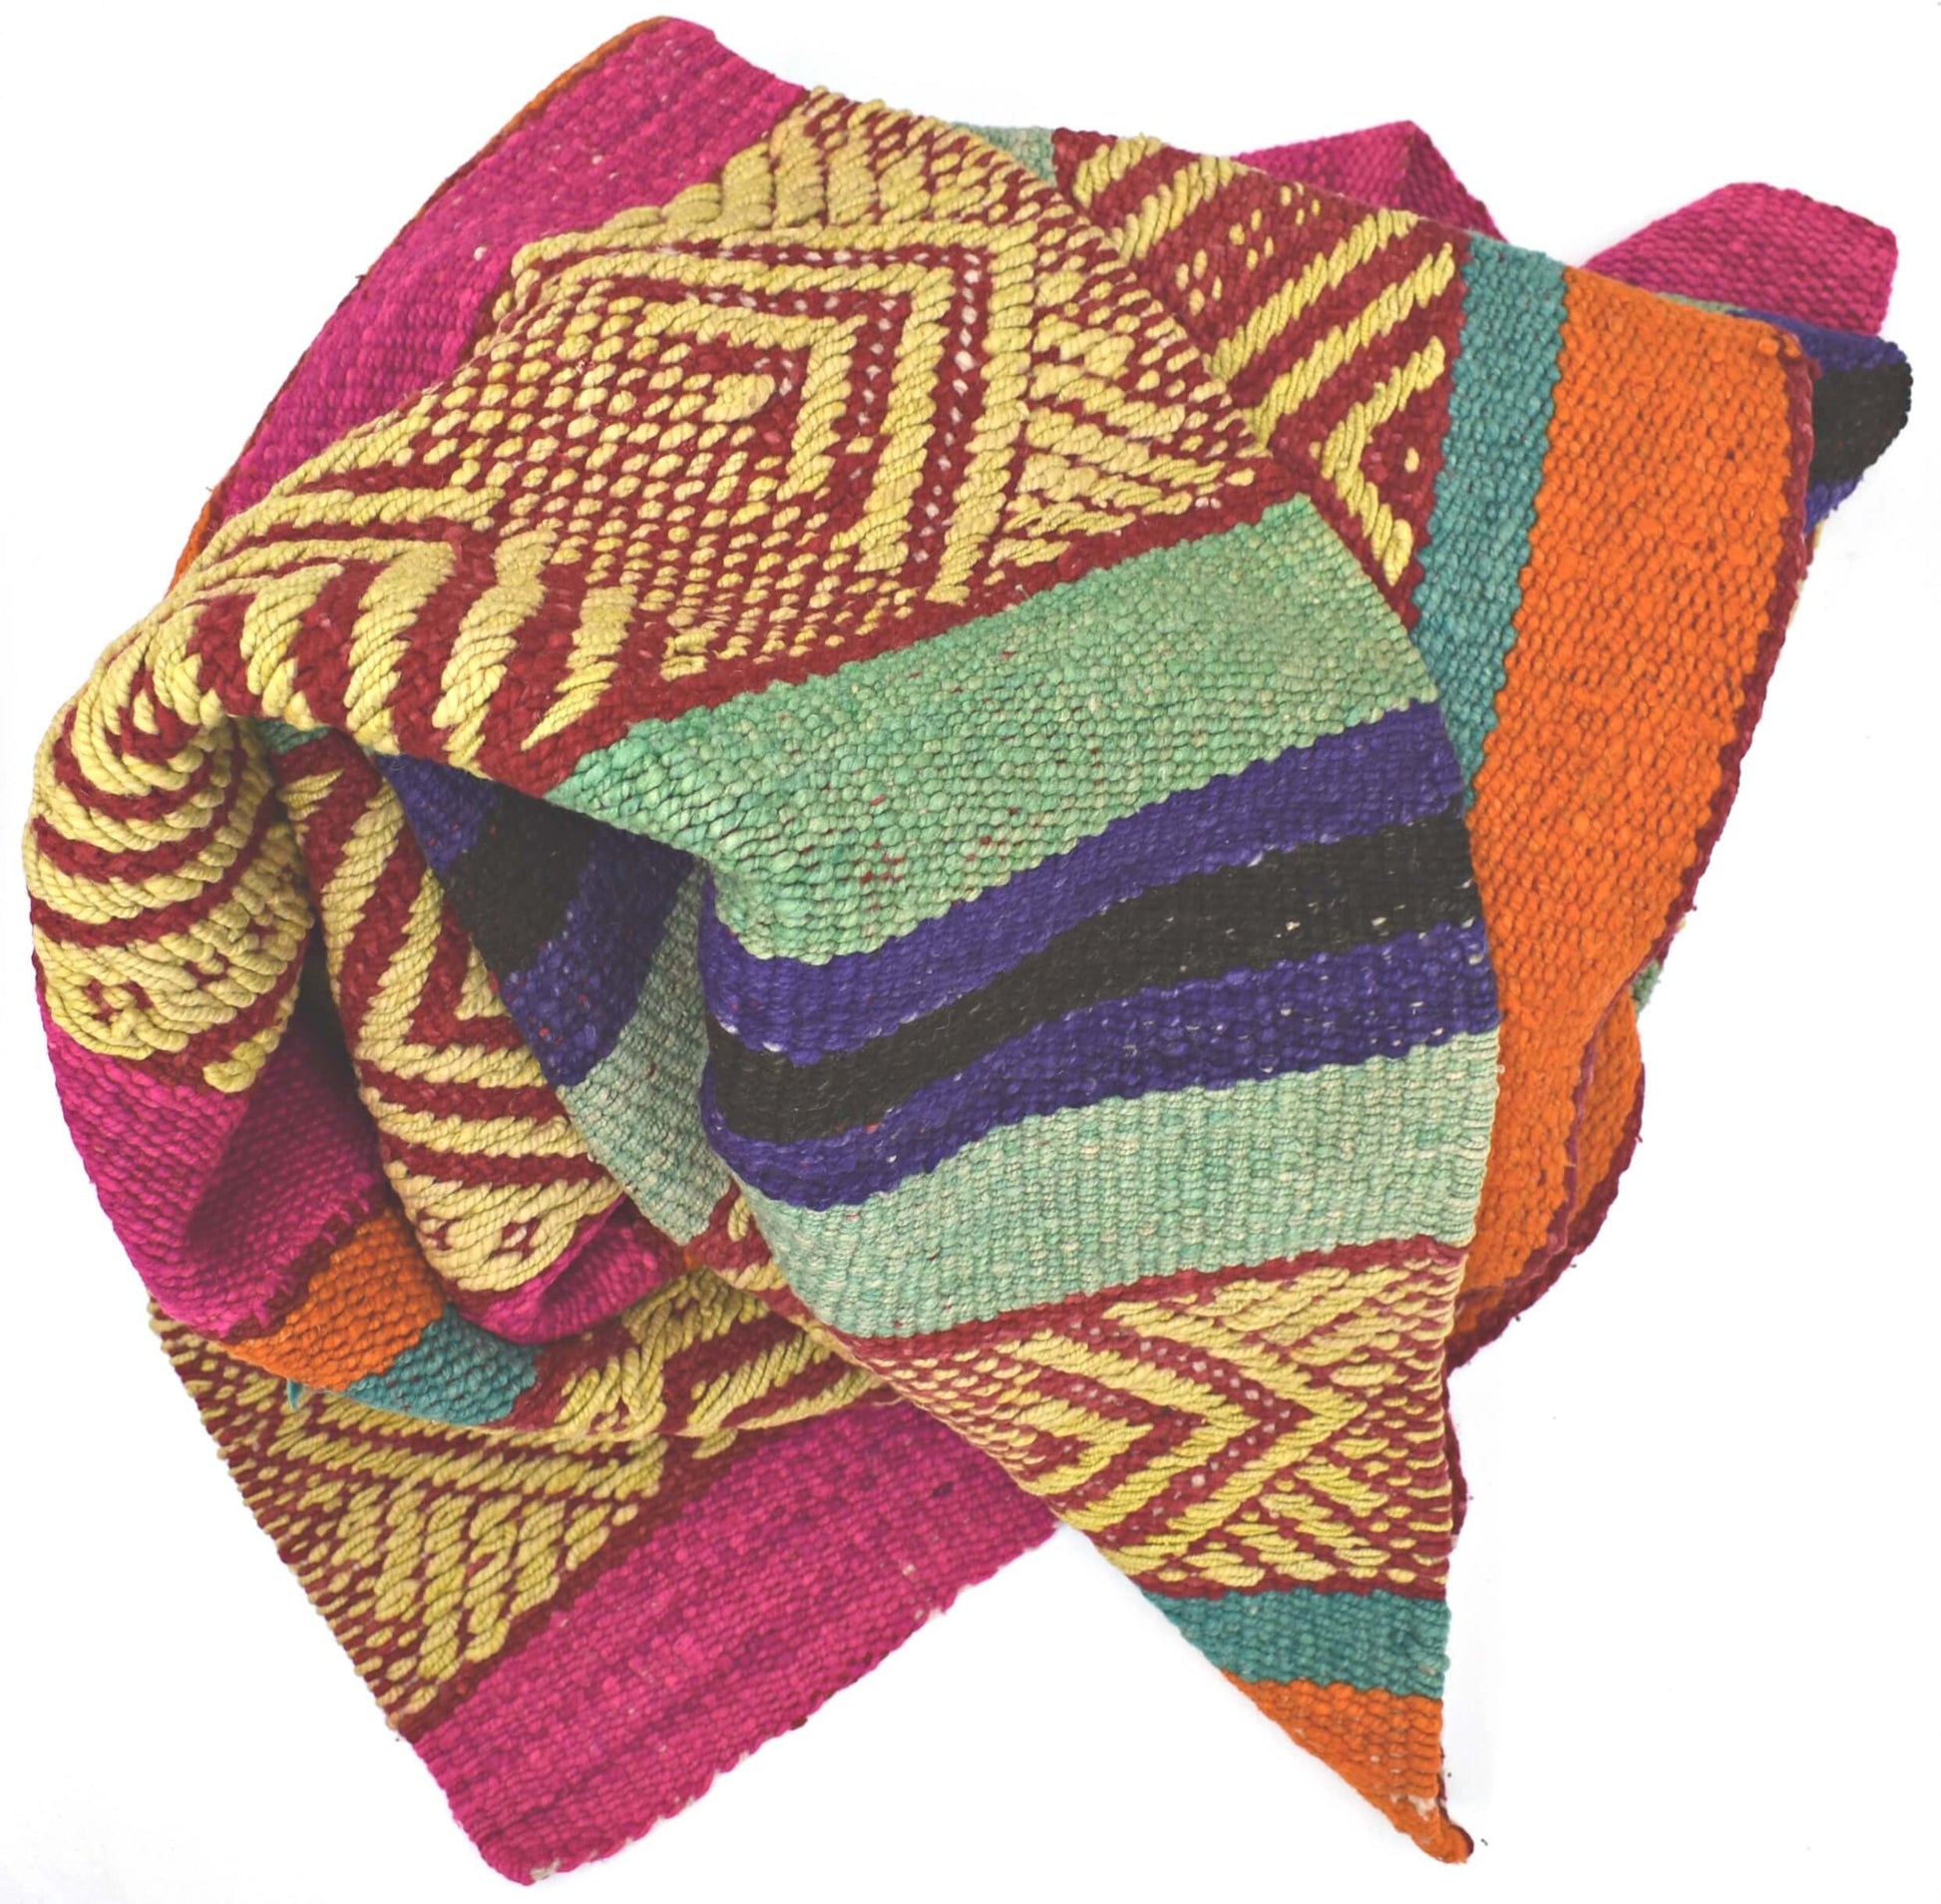 Mayta Collection Peruvian Frazada Blanket/Rug
Jungle Pillows